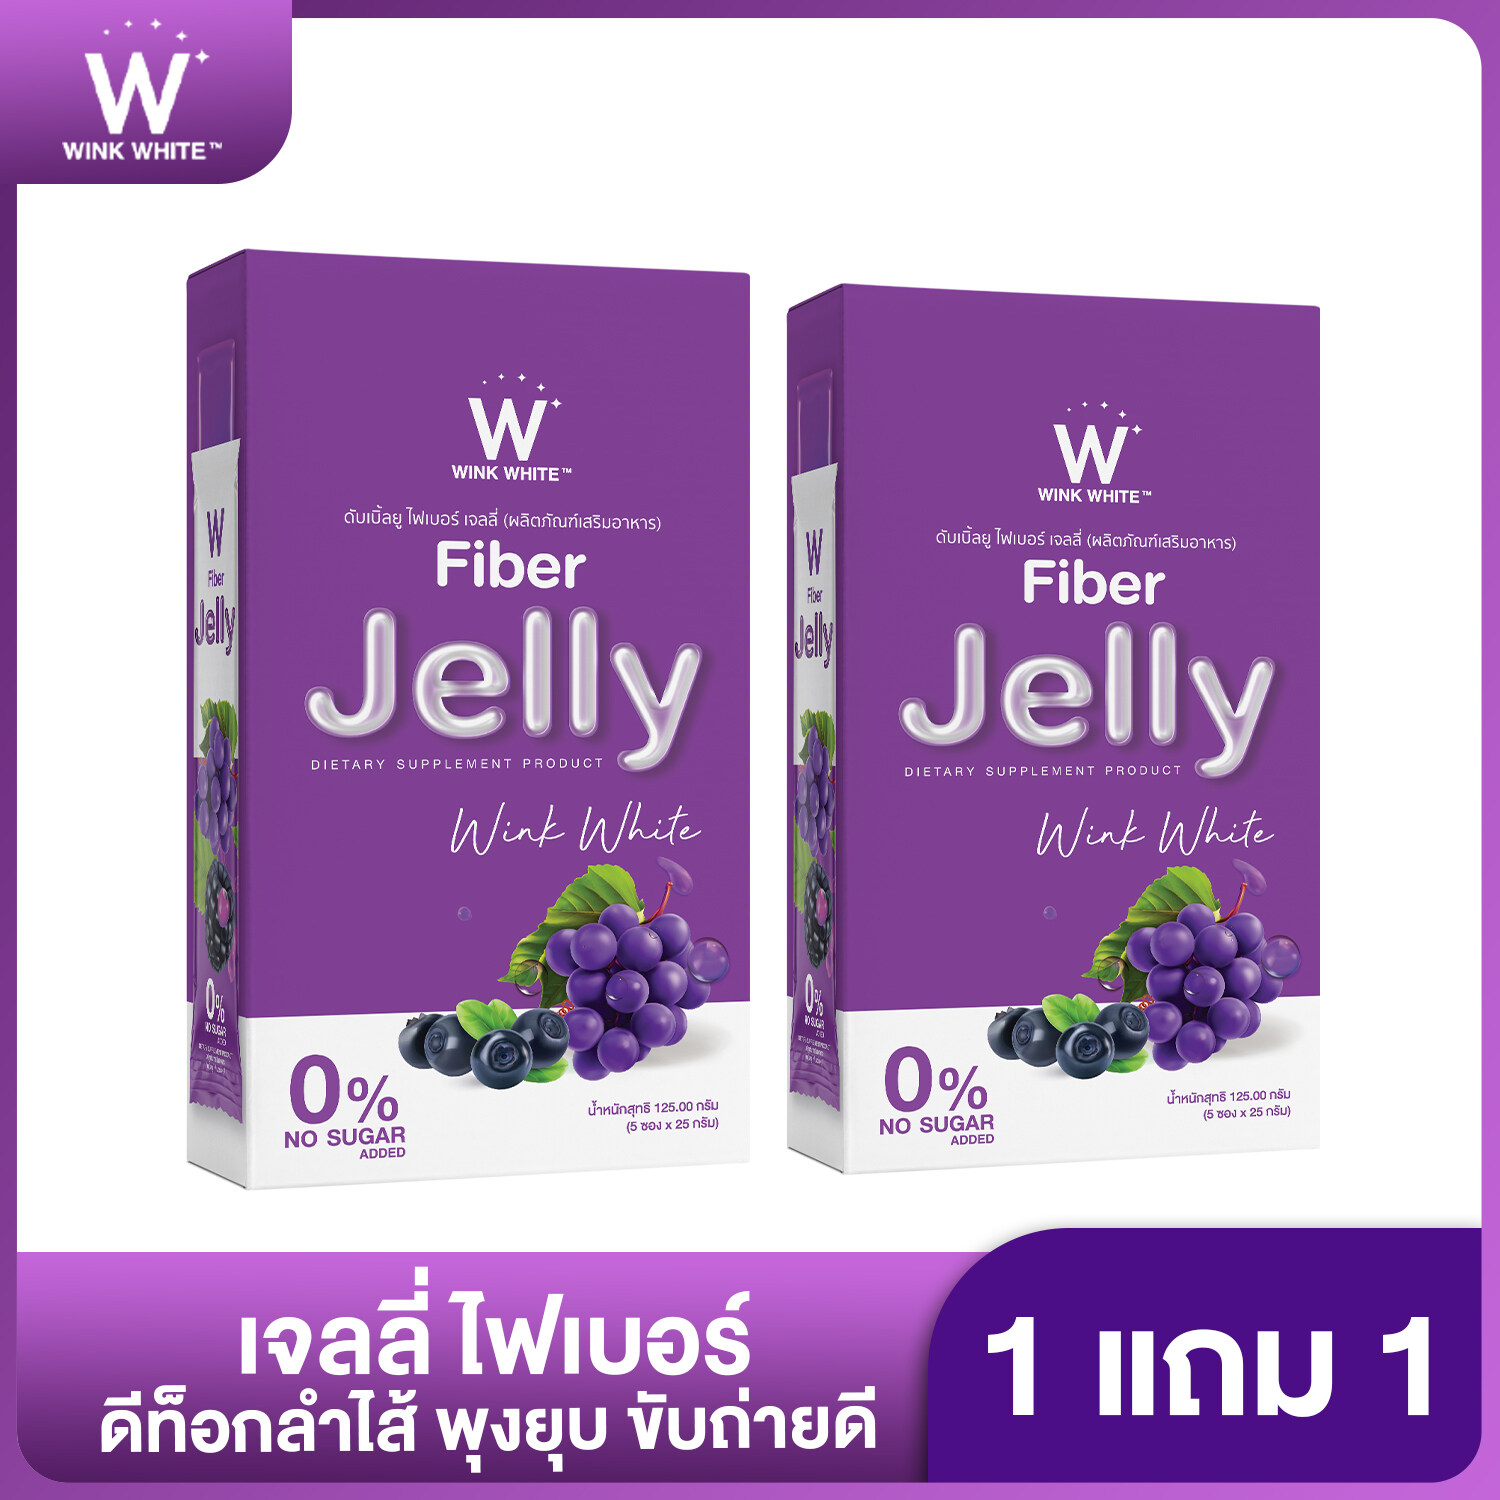 W Fiber Jelly ไฟเบอร์เจลลี่ ดีท็อค กลิ่นองุ่น detox [ 1 แถม 1 ]